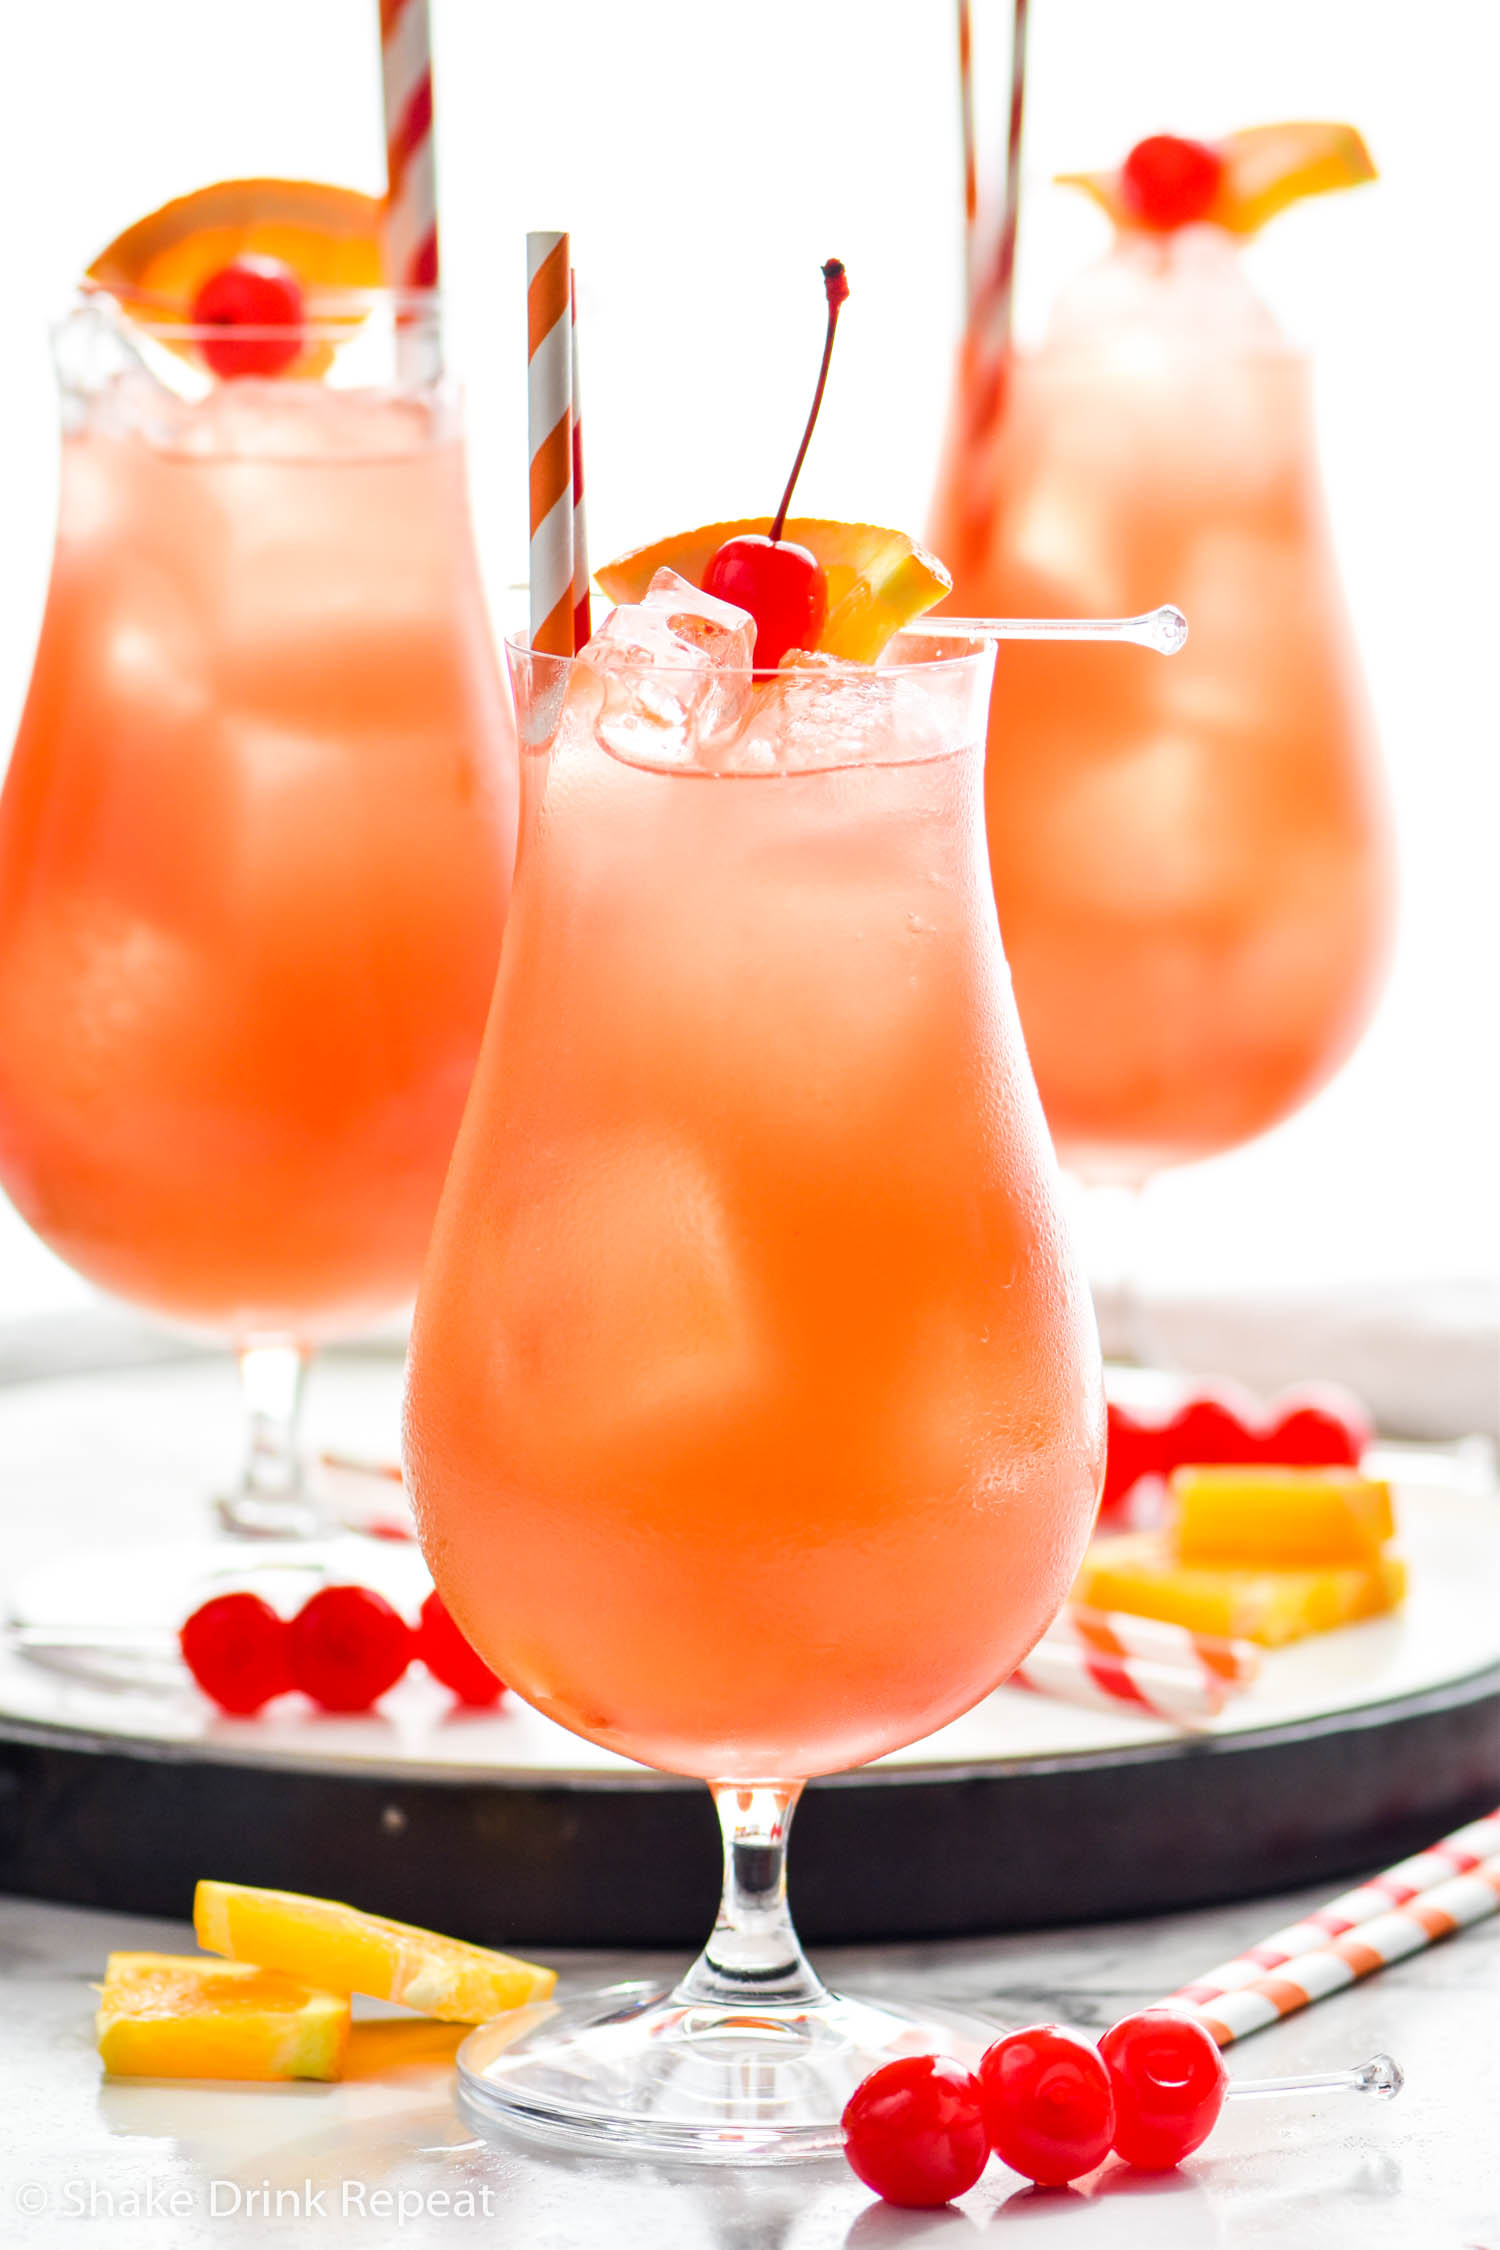 three glasses of Sex on The Beach with ice, straws, orange slices, and maraschino cherries for garnish